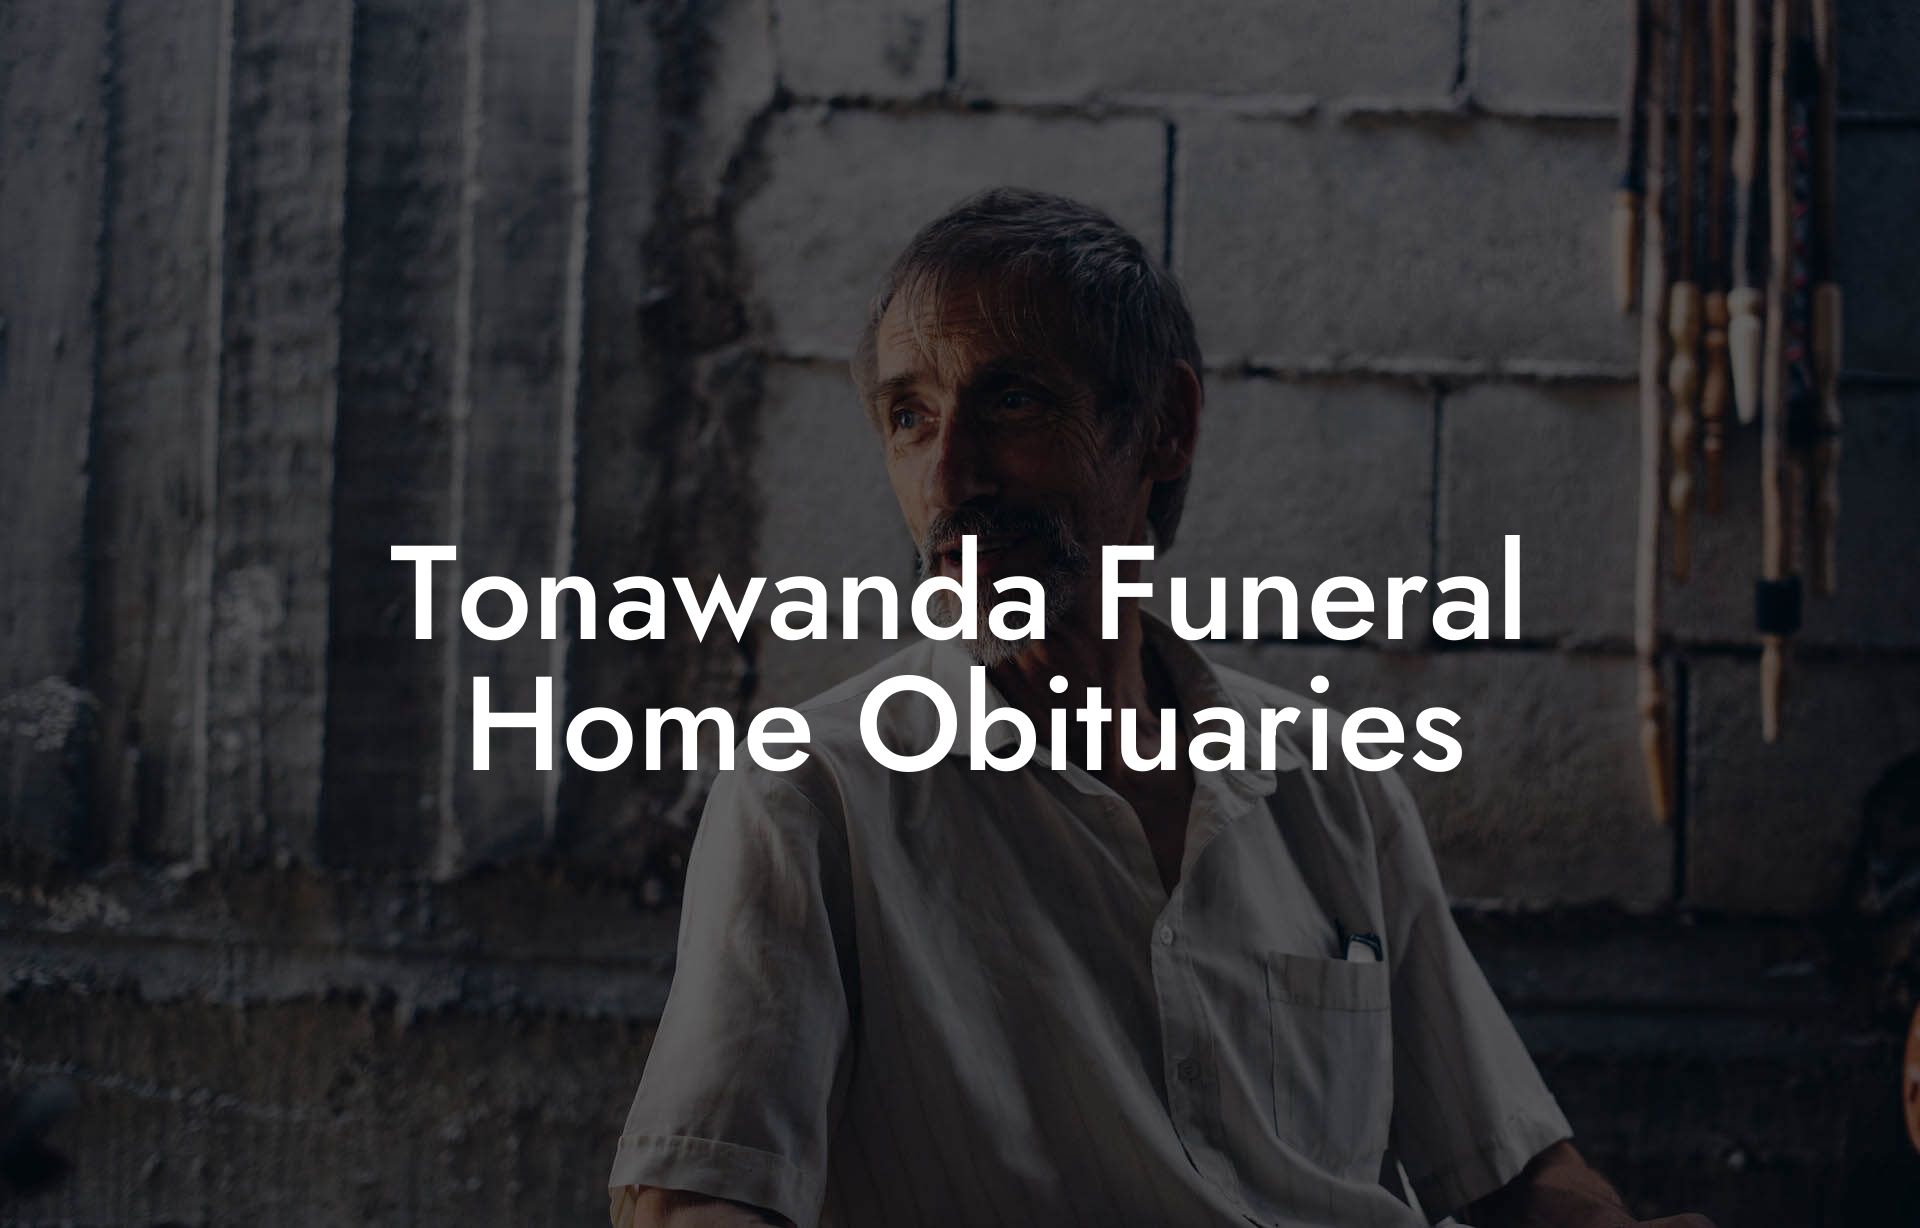 Tonawanda Funeral Home Obituaries